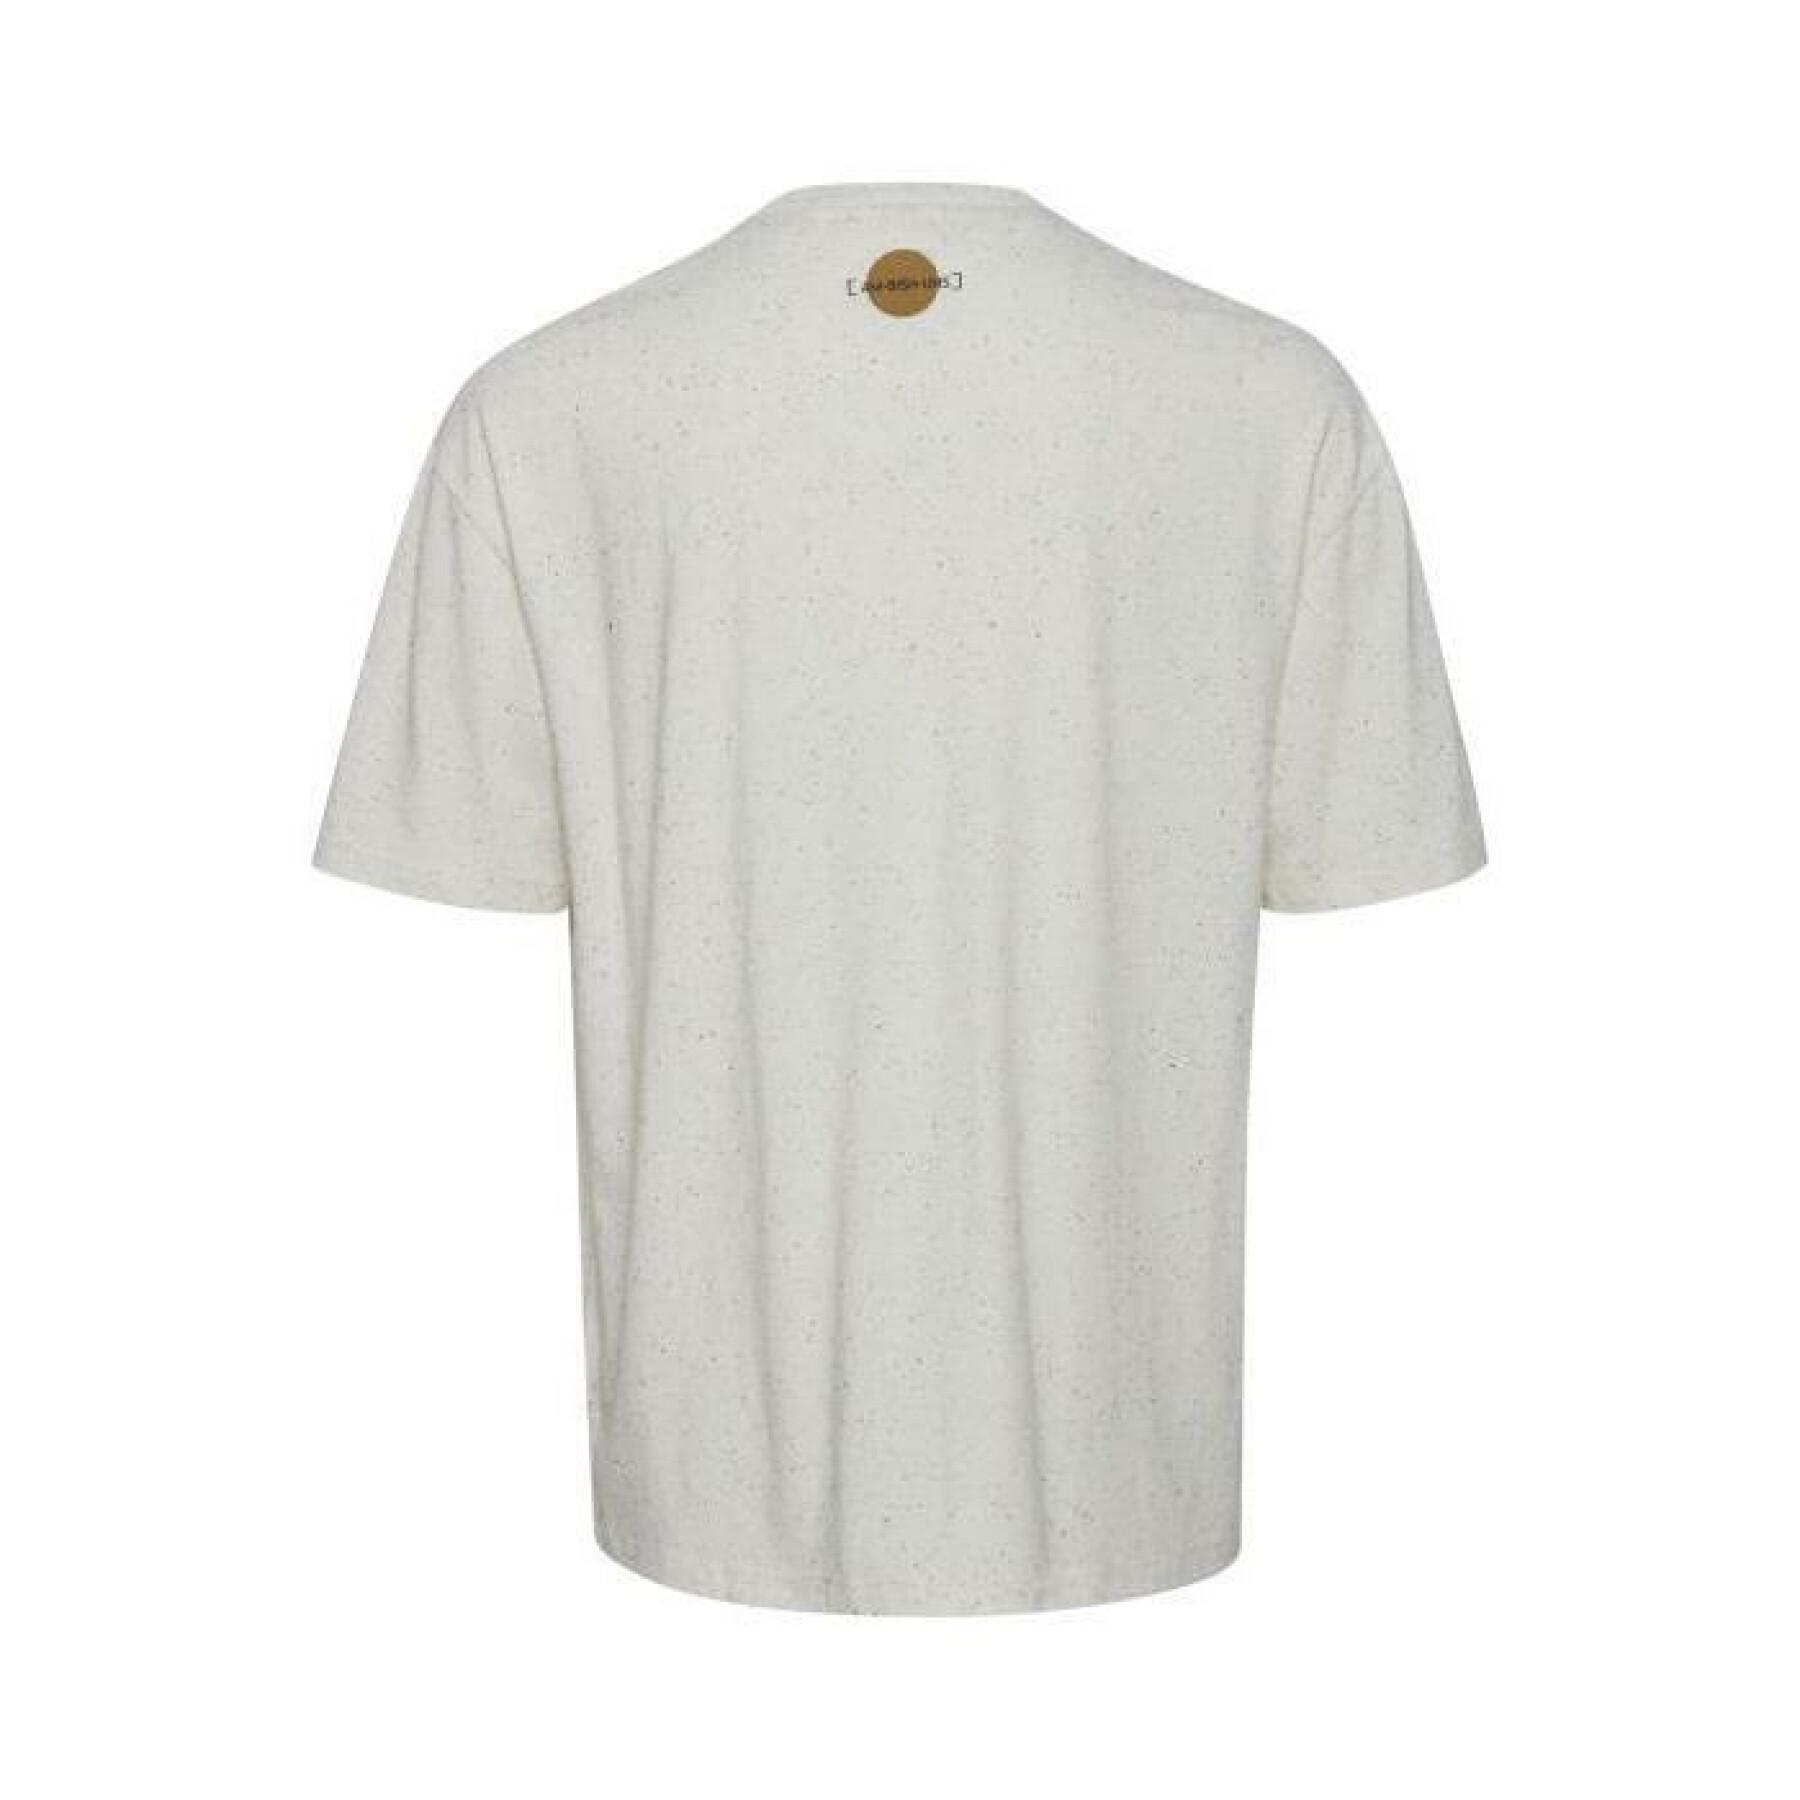 T-shirt Blend Ambitious - T-shirts & Polo shirts - Clothing - Men